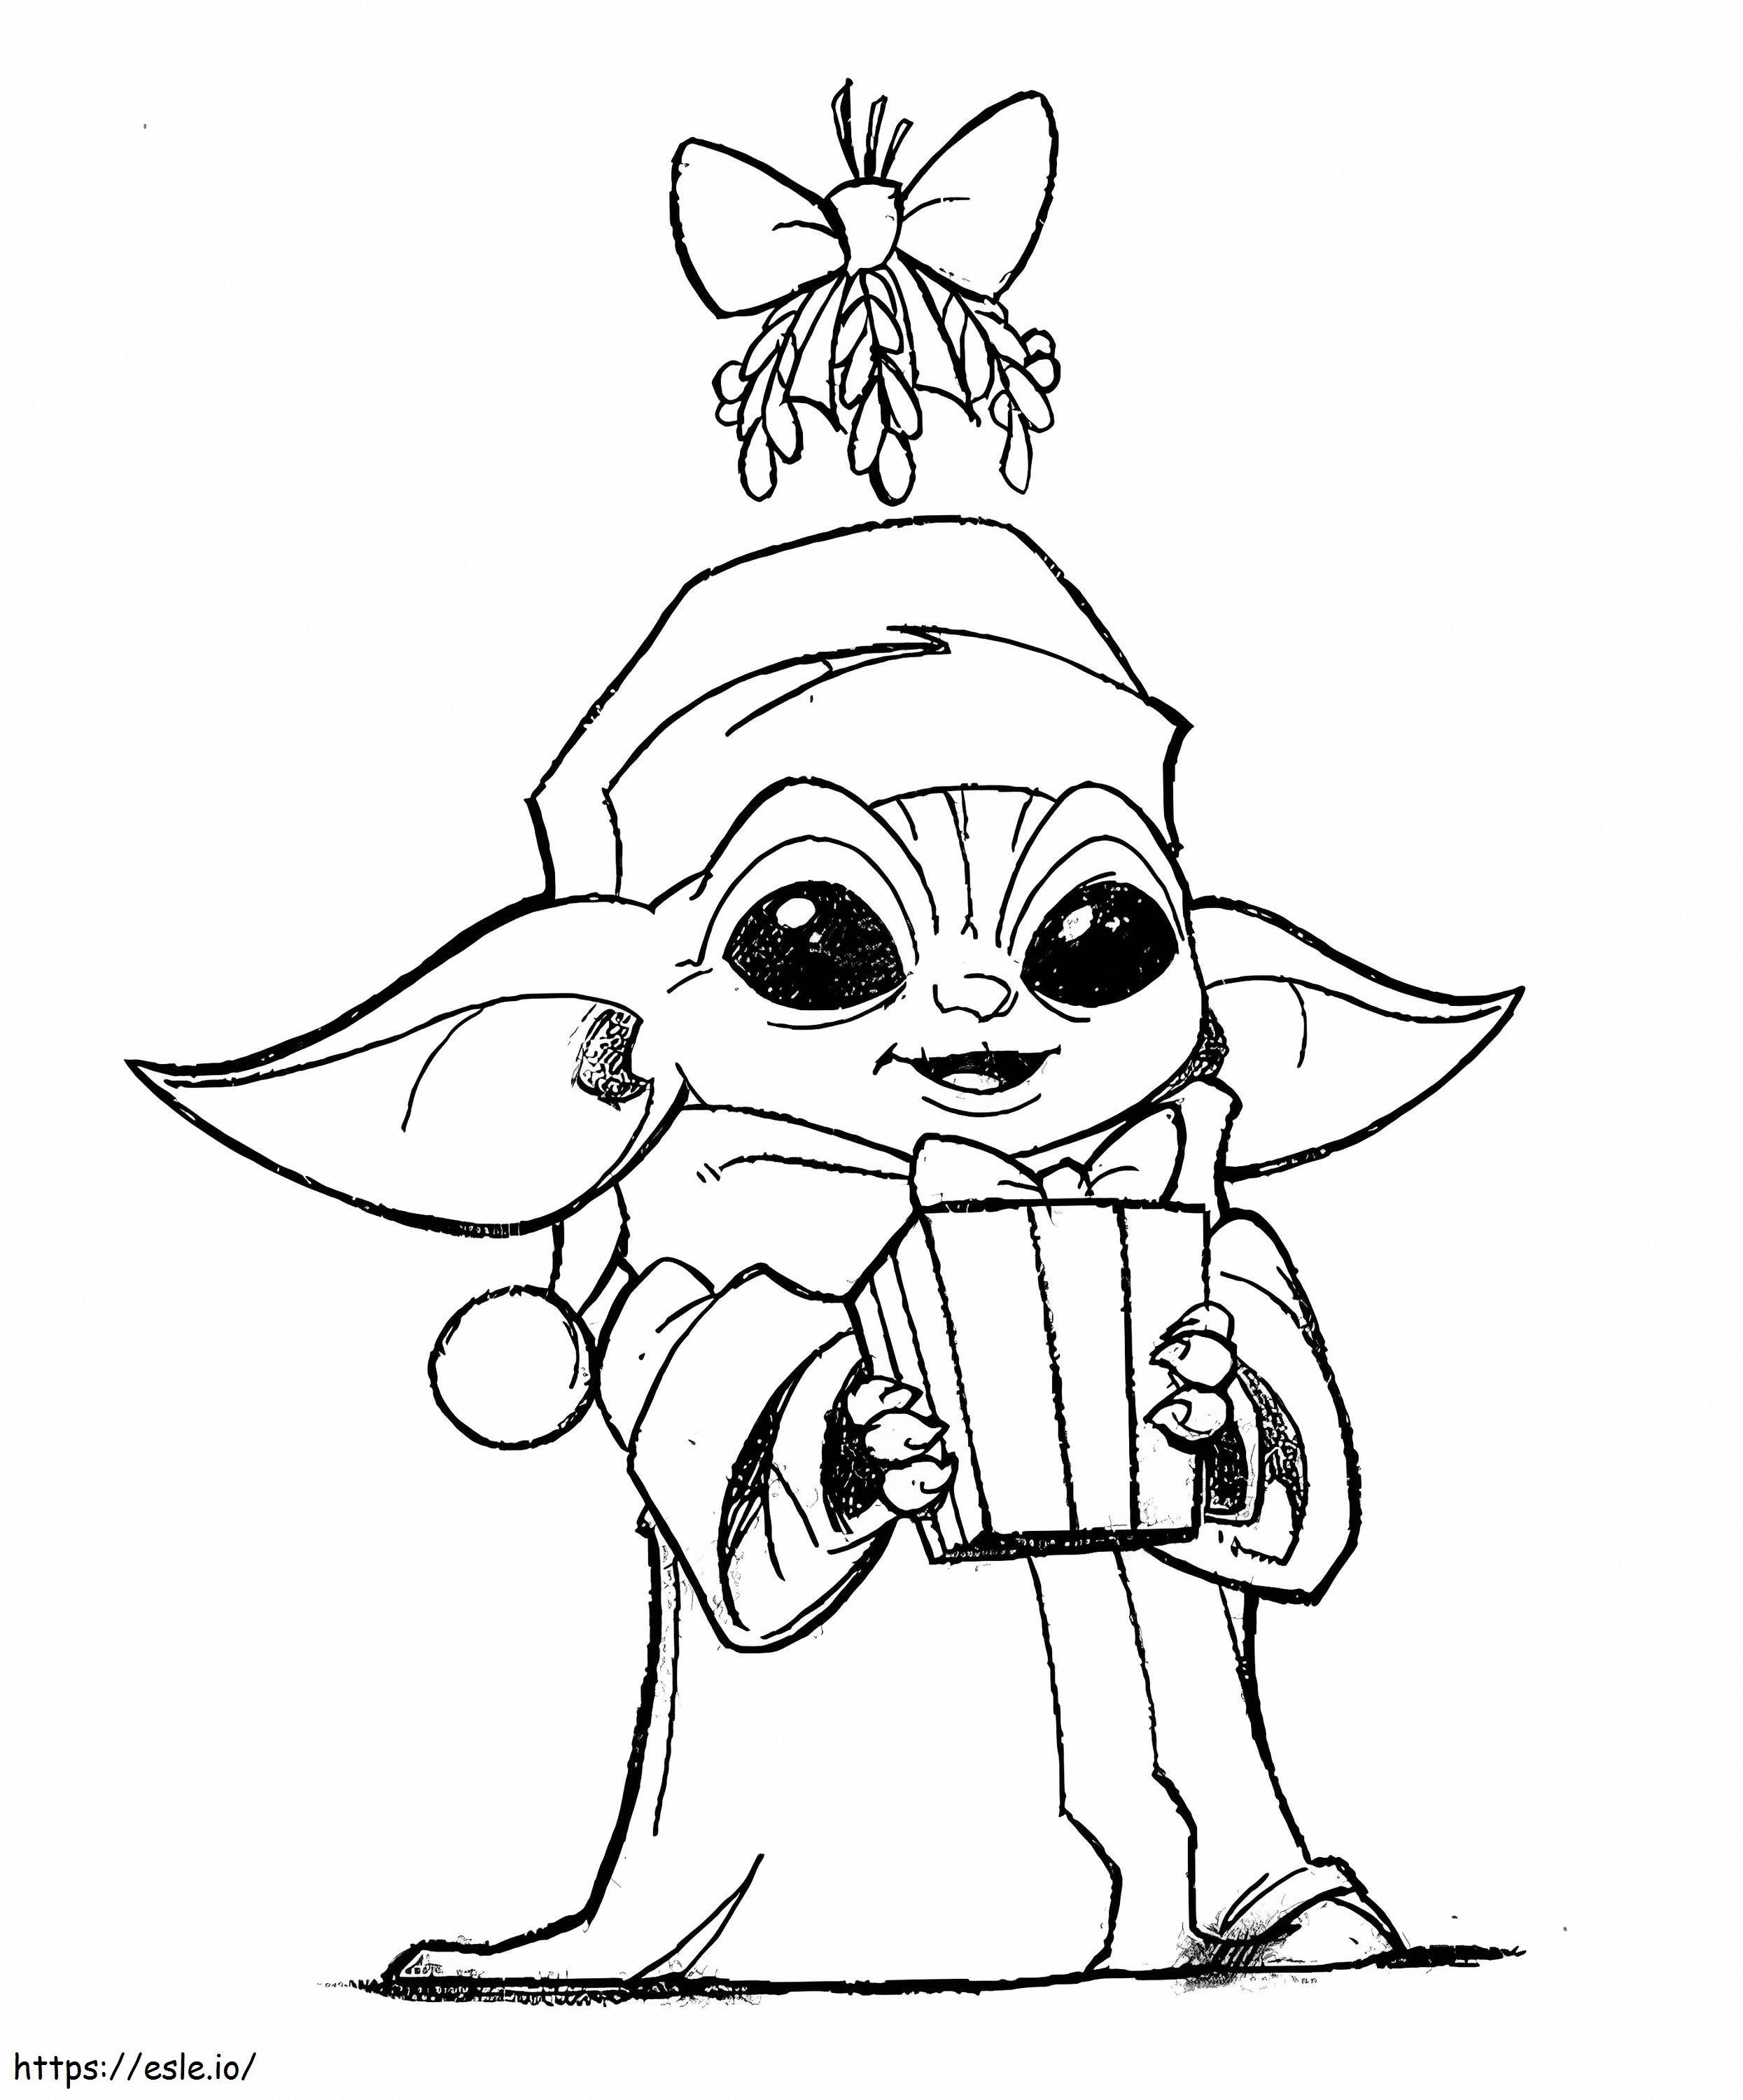 Baby Yoda e regalo da colorare